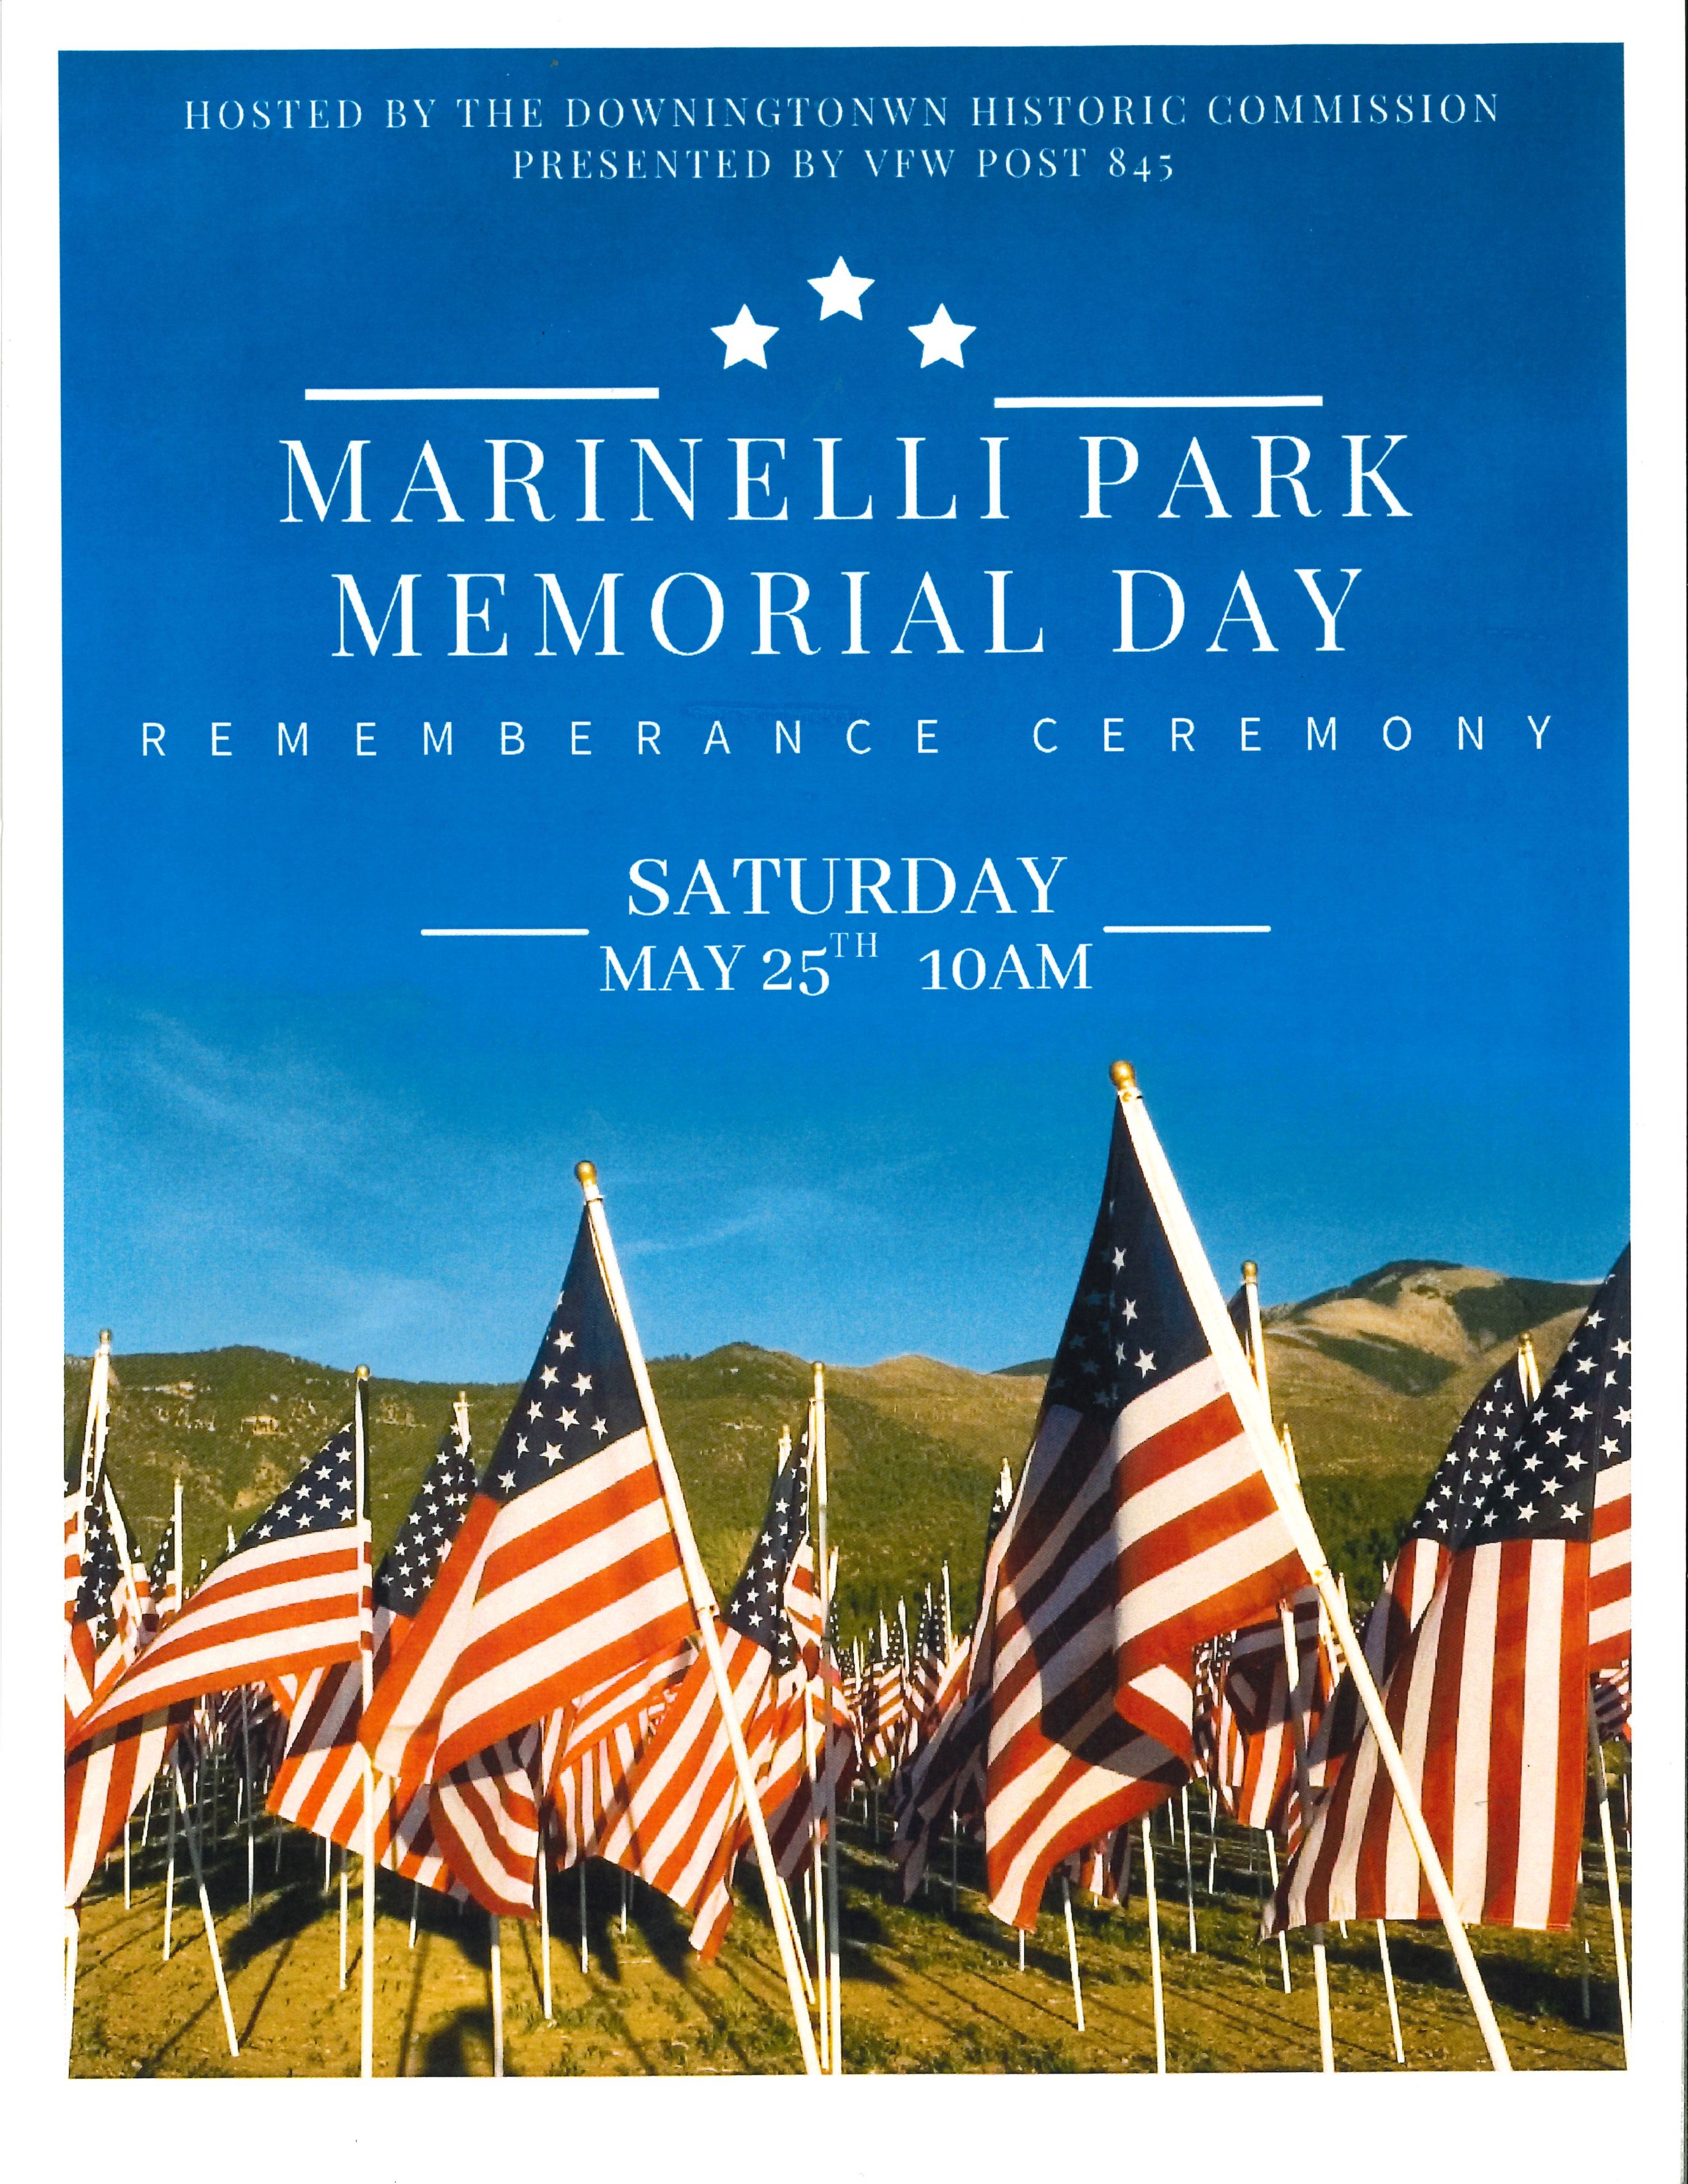 Marinelli Park Memorial Day flyer